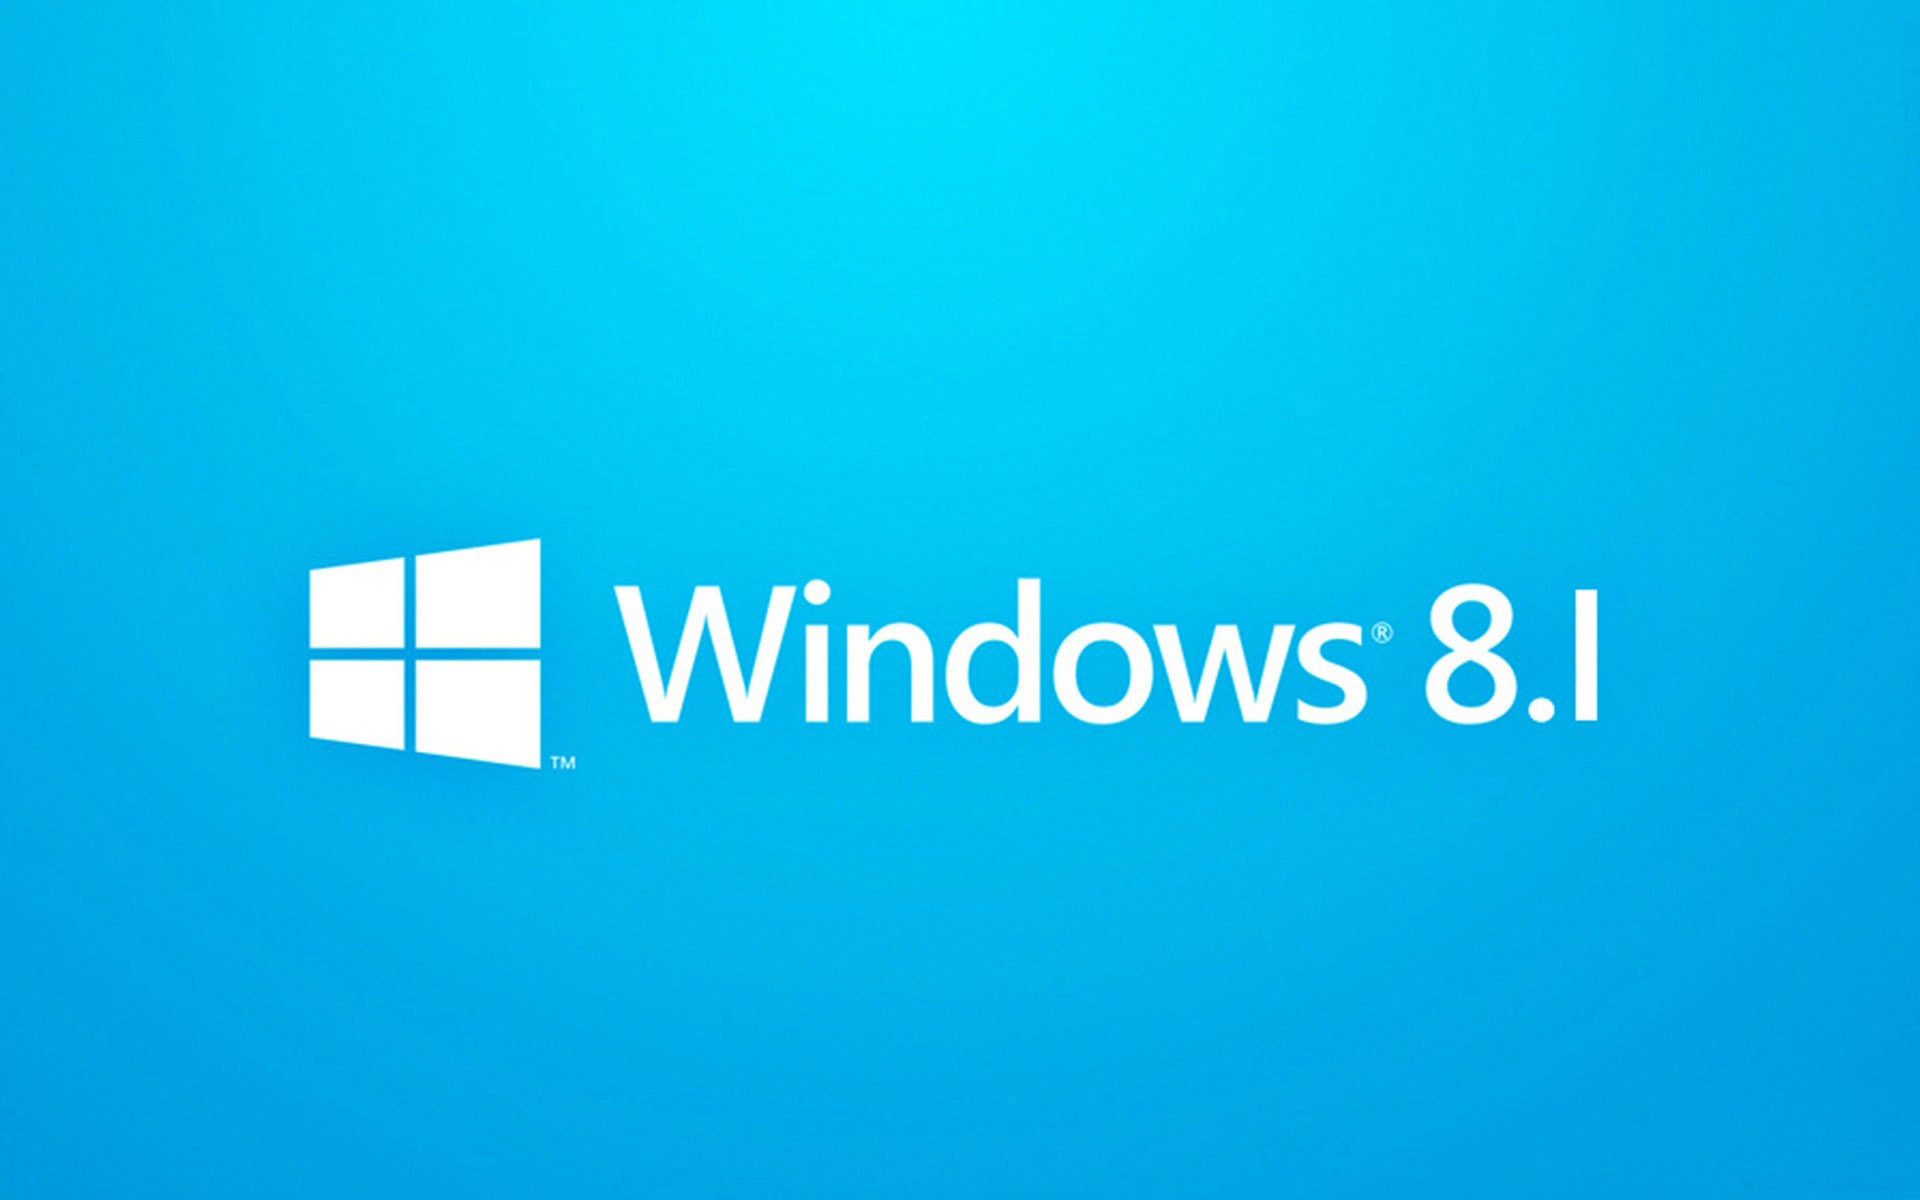 Windows 8 wallpaper 19201200 - WideWallpaper.info Free HD